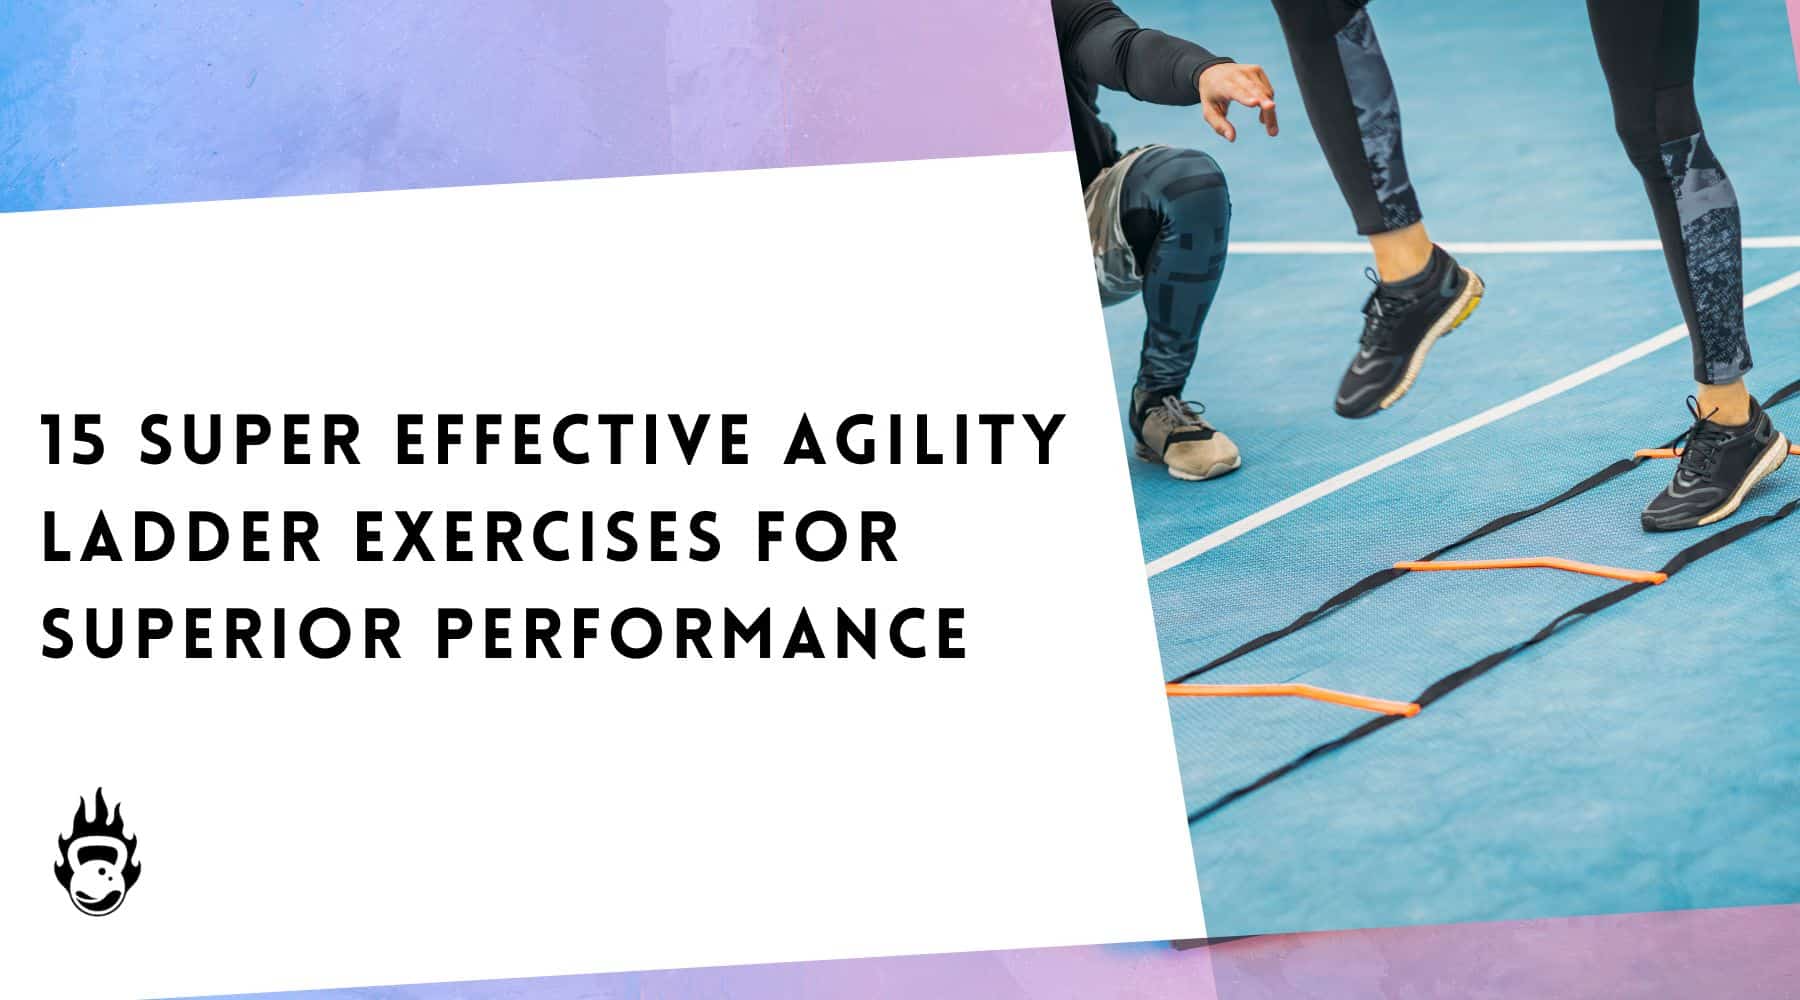 How to Improve Agility: 7 Agility Training Exercises